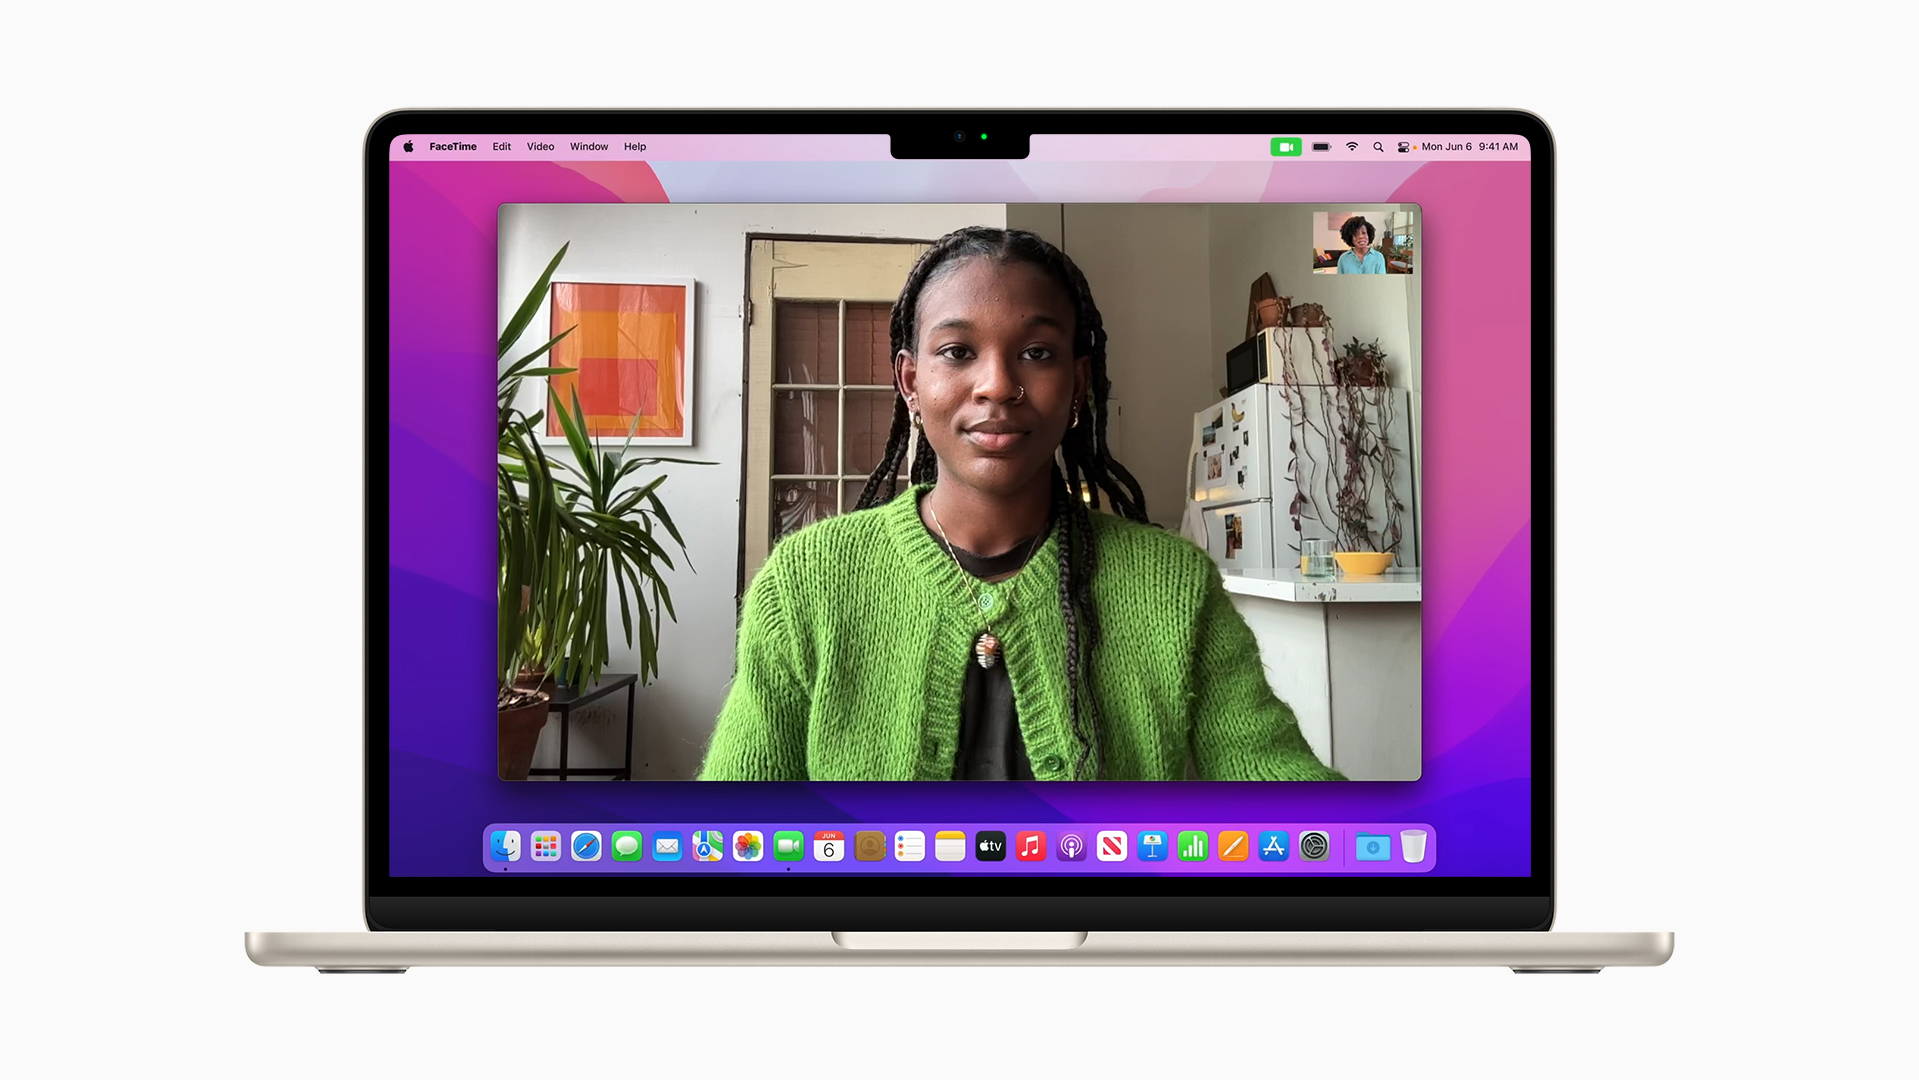 Apple-WWDC22-MacBook-Air-camera-demo-220606.jpg.large_2x.jpg